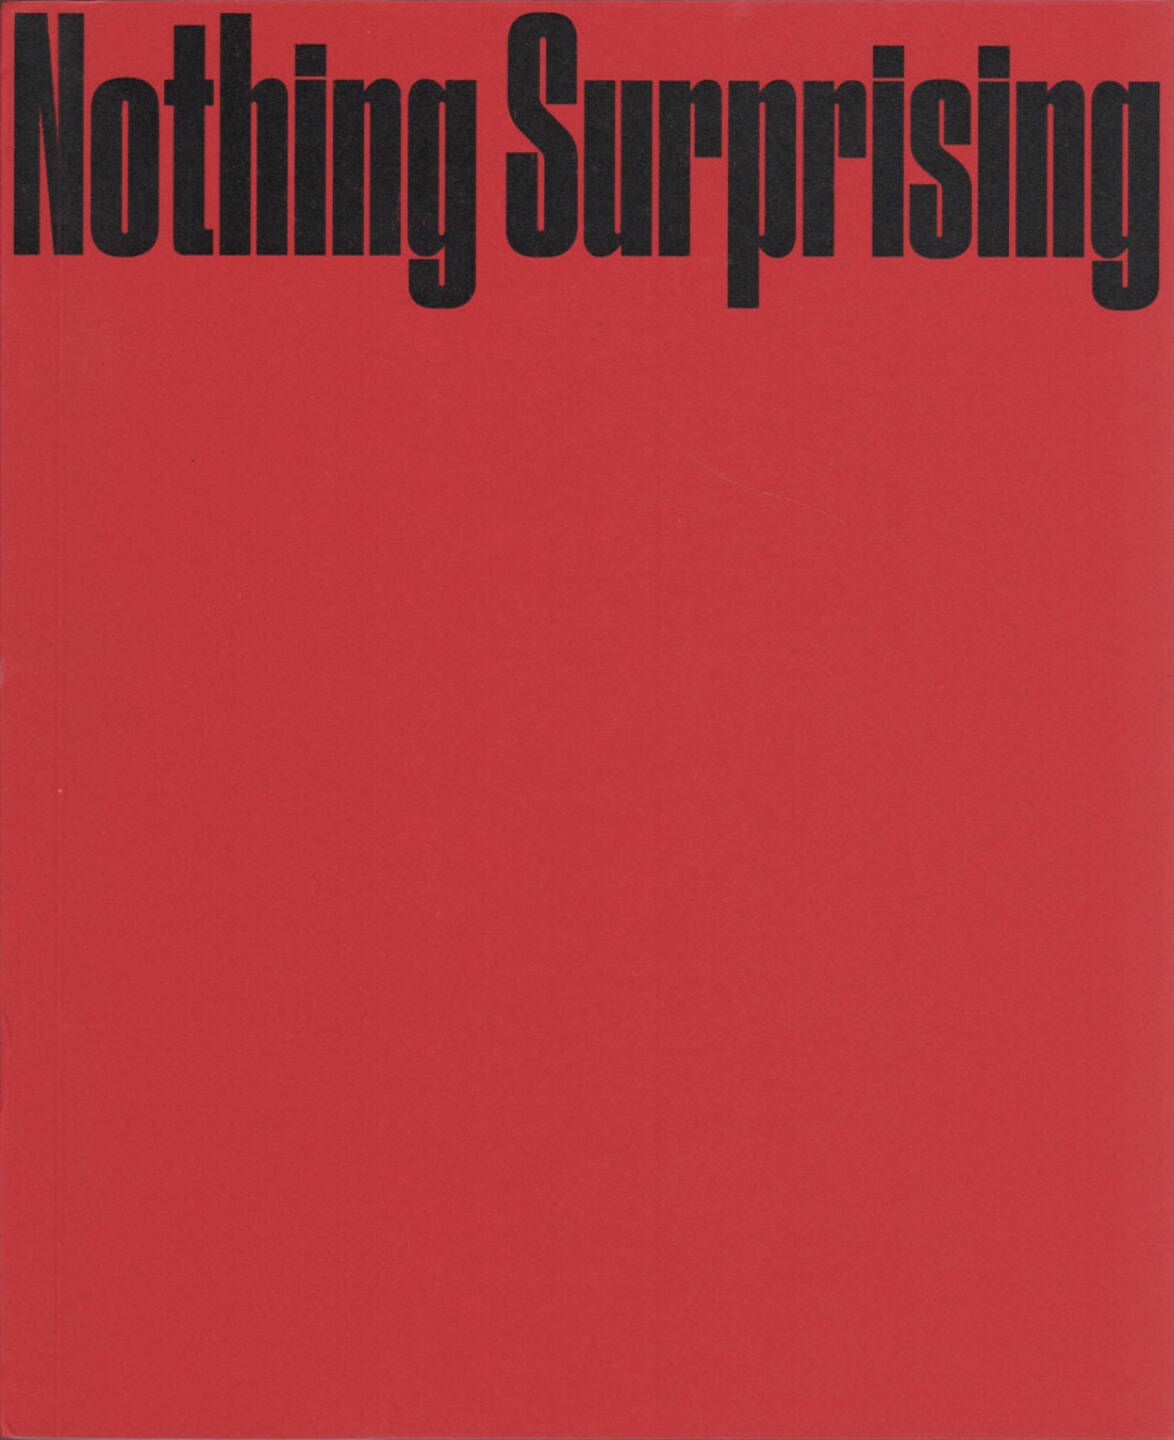 Ali Taptik - Nothing Surprising, Marraine Ginette éditions 2015, Cover - http://josefchladek.com/book/ali_taptik_-_nothing_surprising